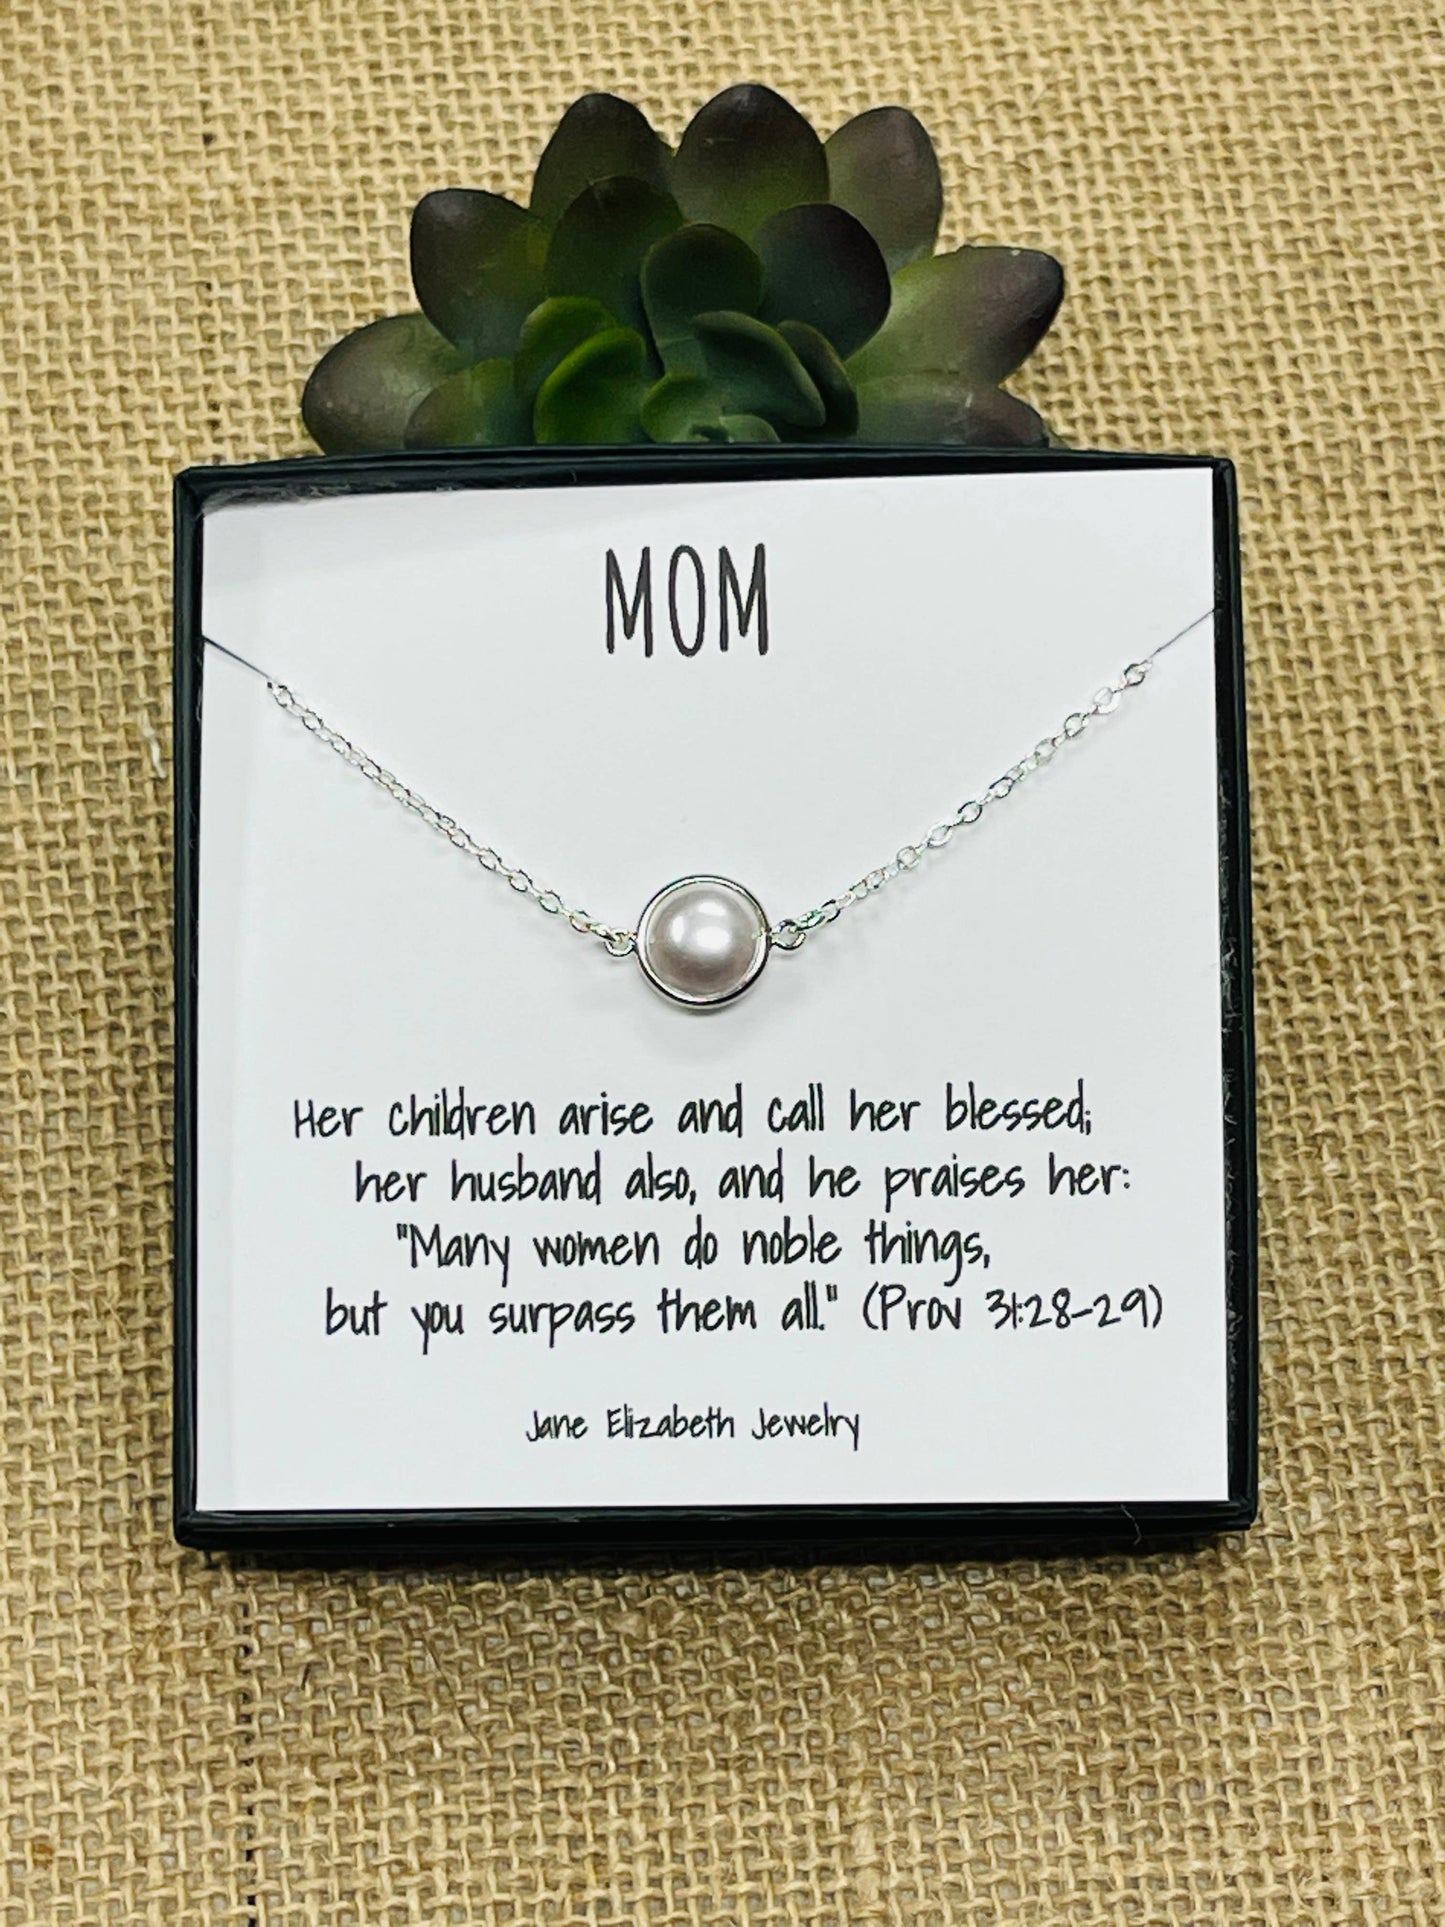 Mom necklace- Silver